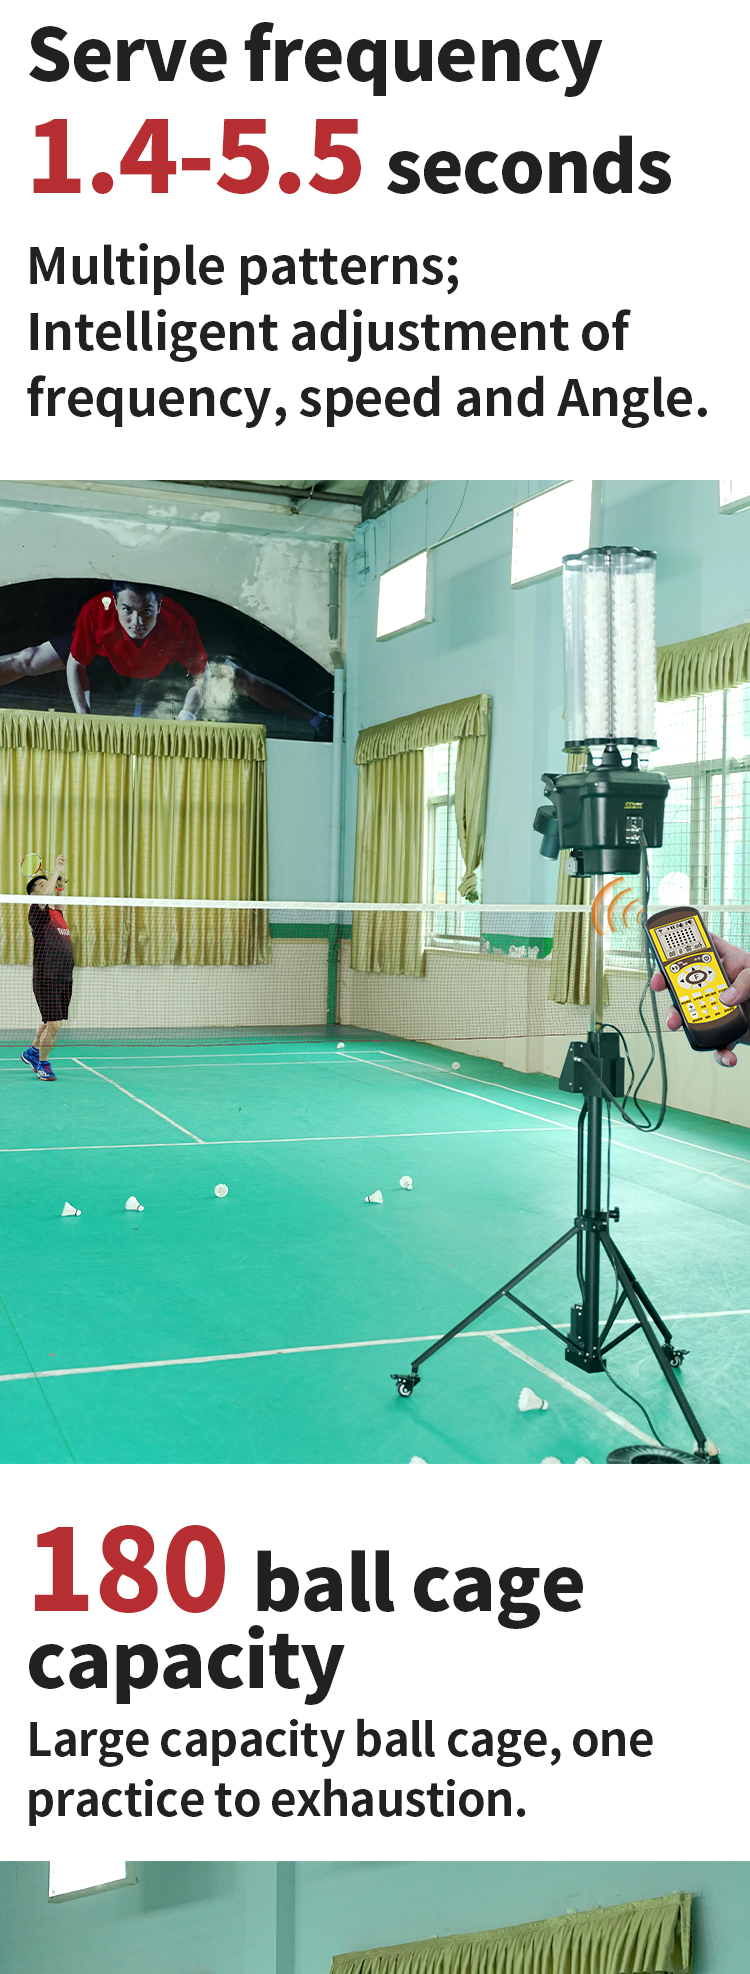 badminton automatic shoot machine 8